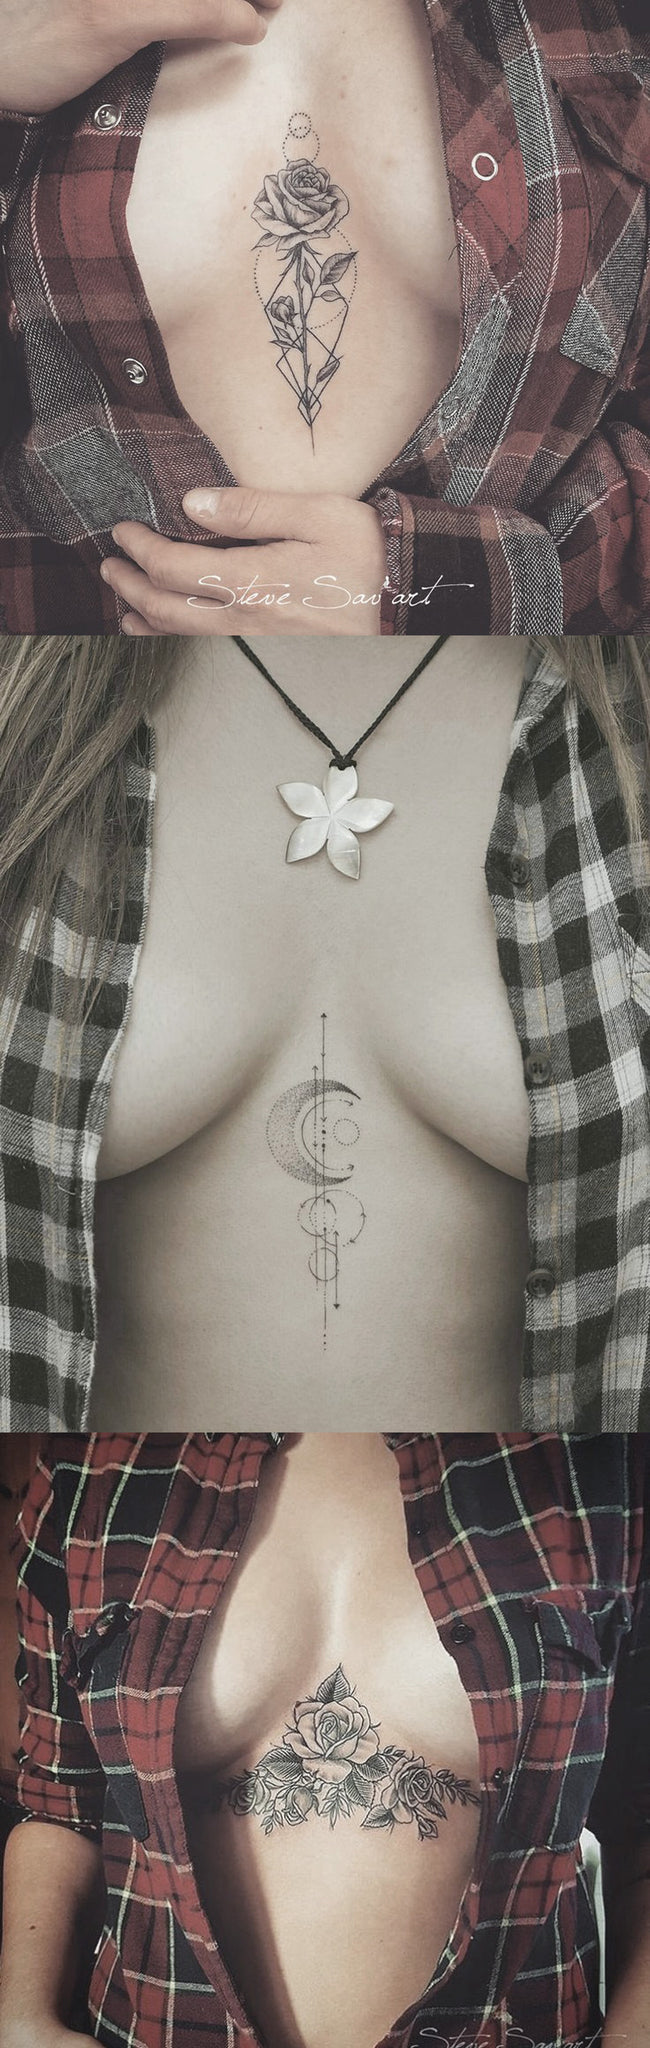 Geometric Moon Vertical Sternum Tattoo Ideas for Women at MyBodiArt.com - Black Henna Floral Rose Flower Boob Tatt